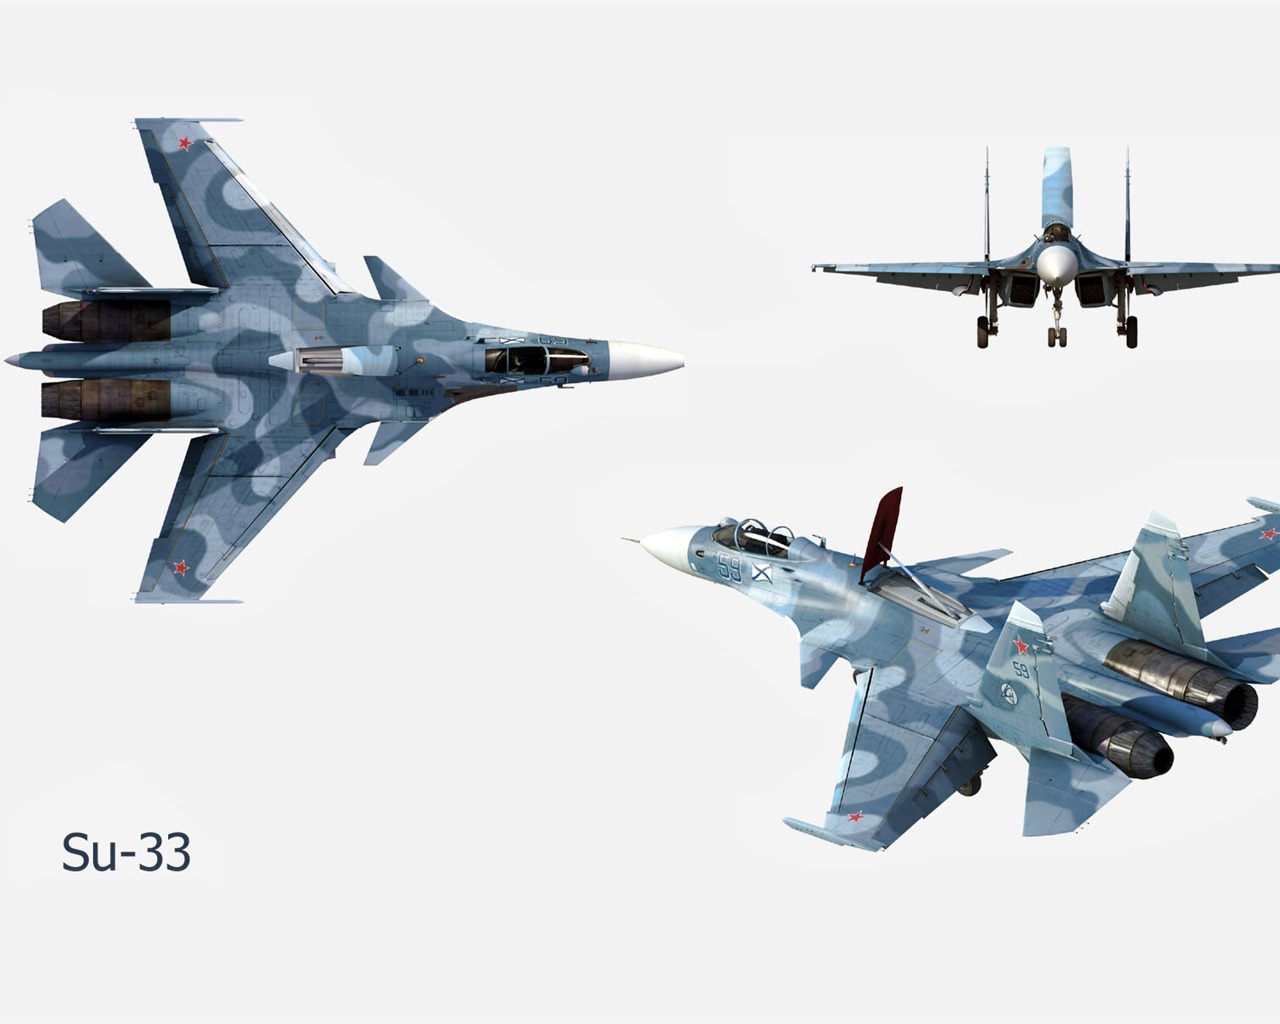 CG wallpaper military aircraft #10 - 1280x1024